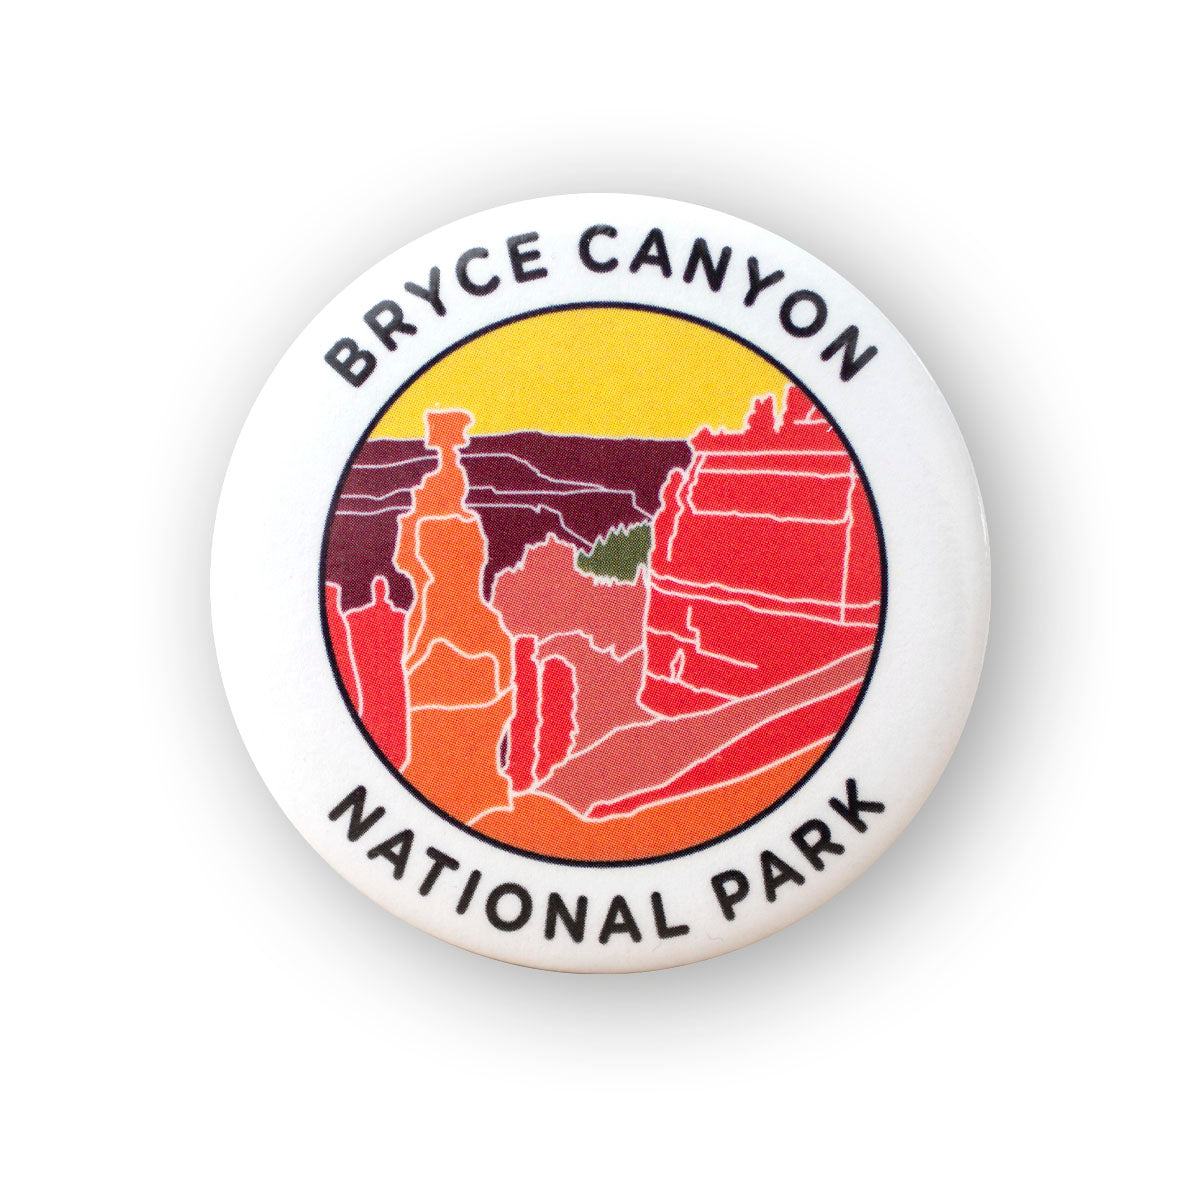 Bryce Canyon National Park Button